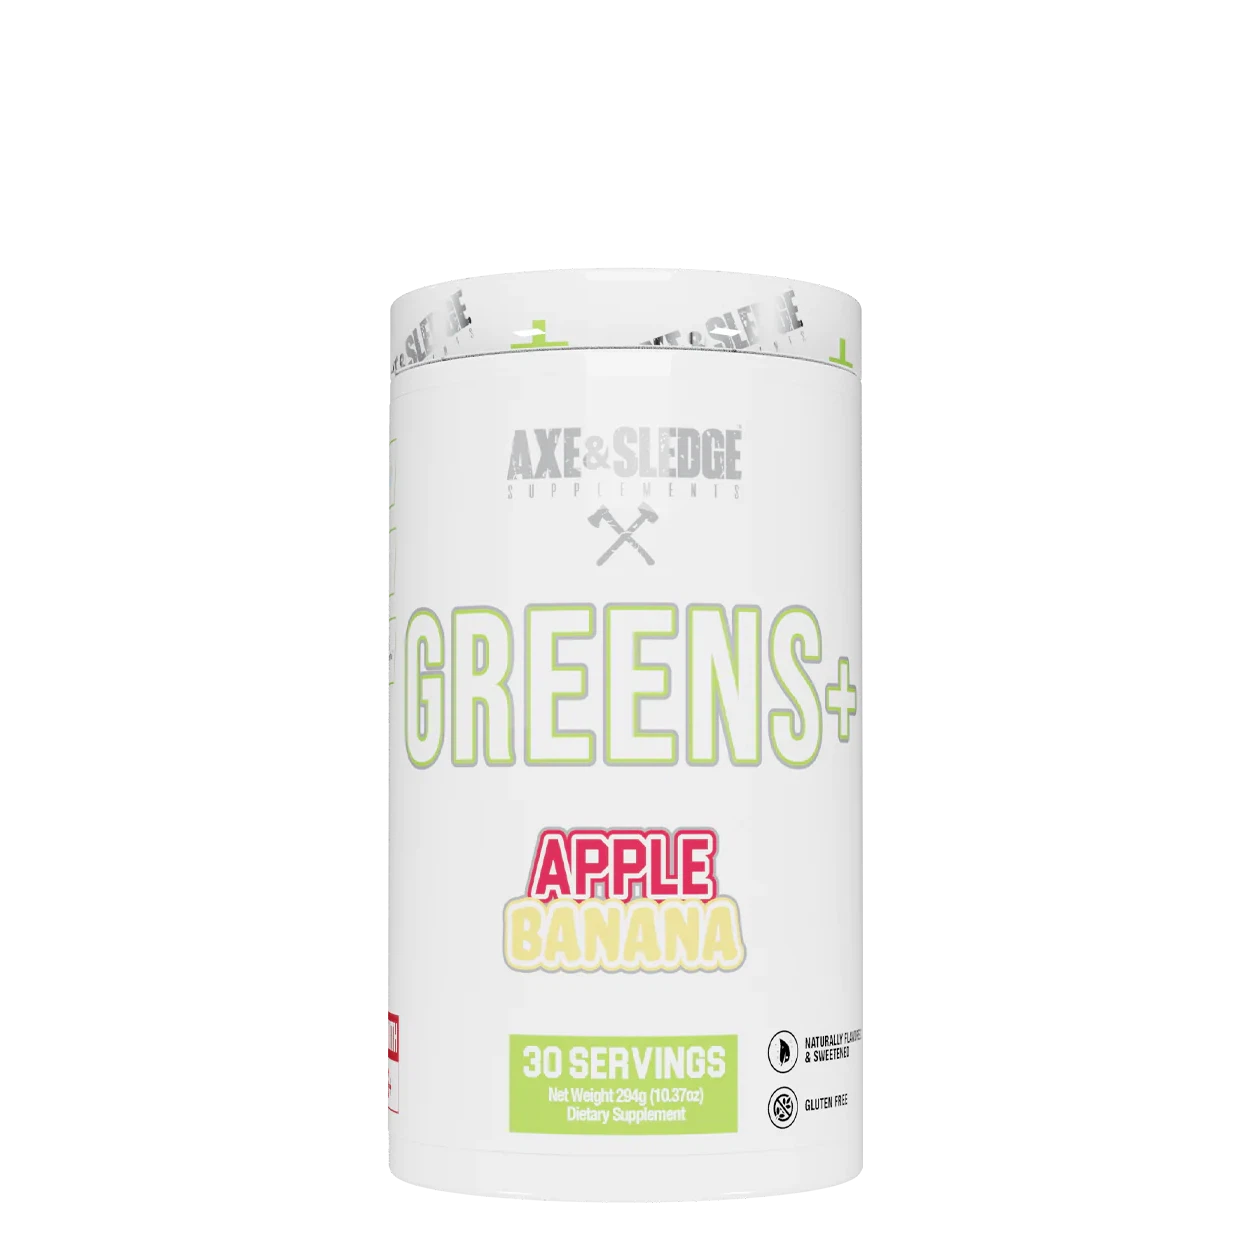 Axe & Sledge Greens+ Supergreens Powder 30 Servings -Apple Banana Flavor